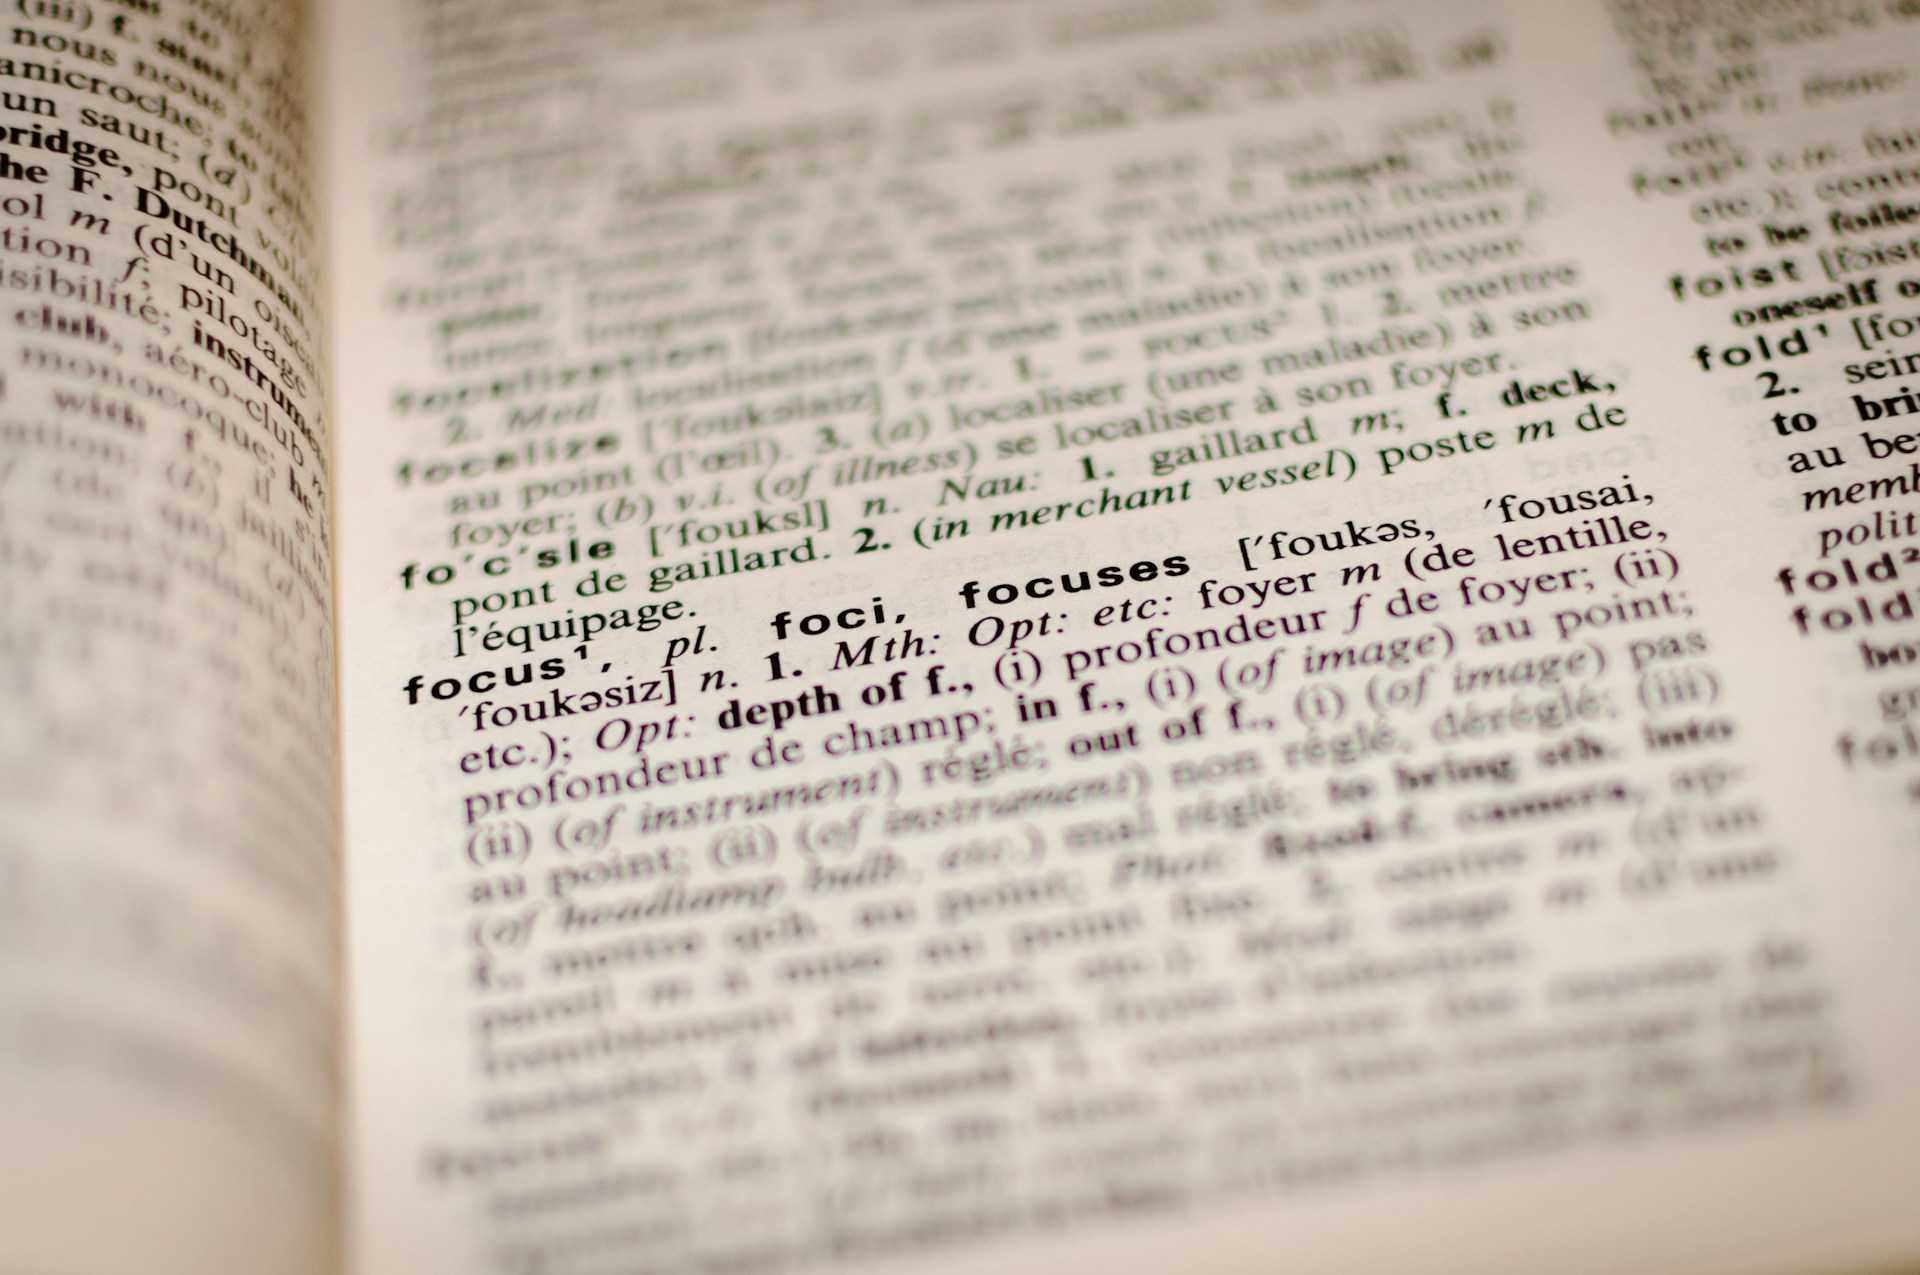 Dictionary photo by <a href="https://unsplash.com/@rvignes">Romain Vignes</a>